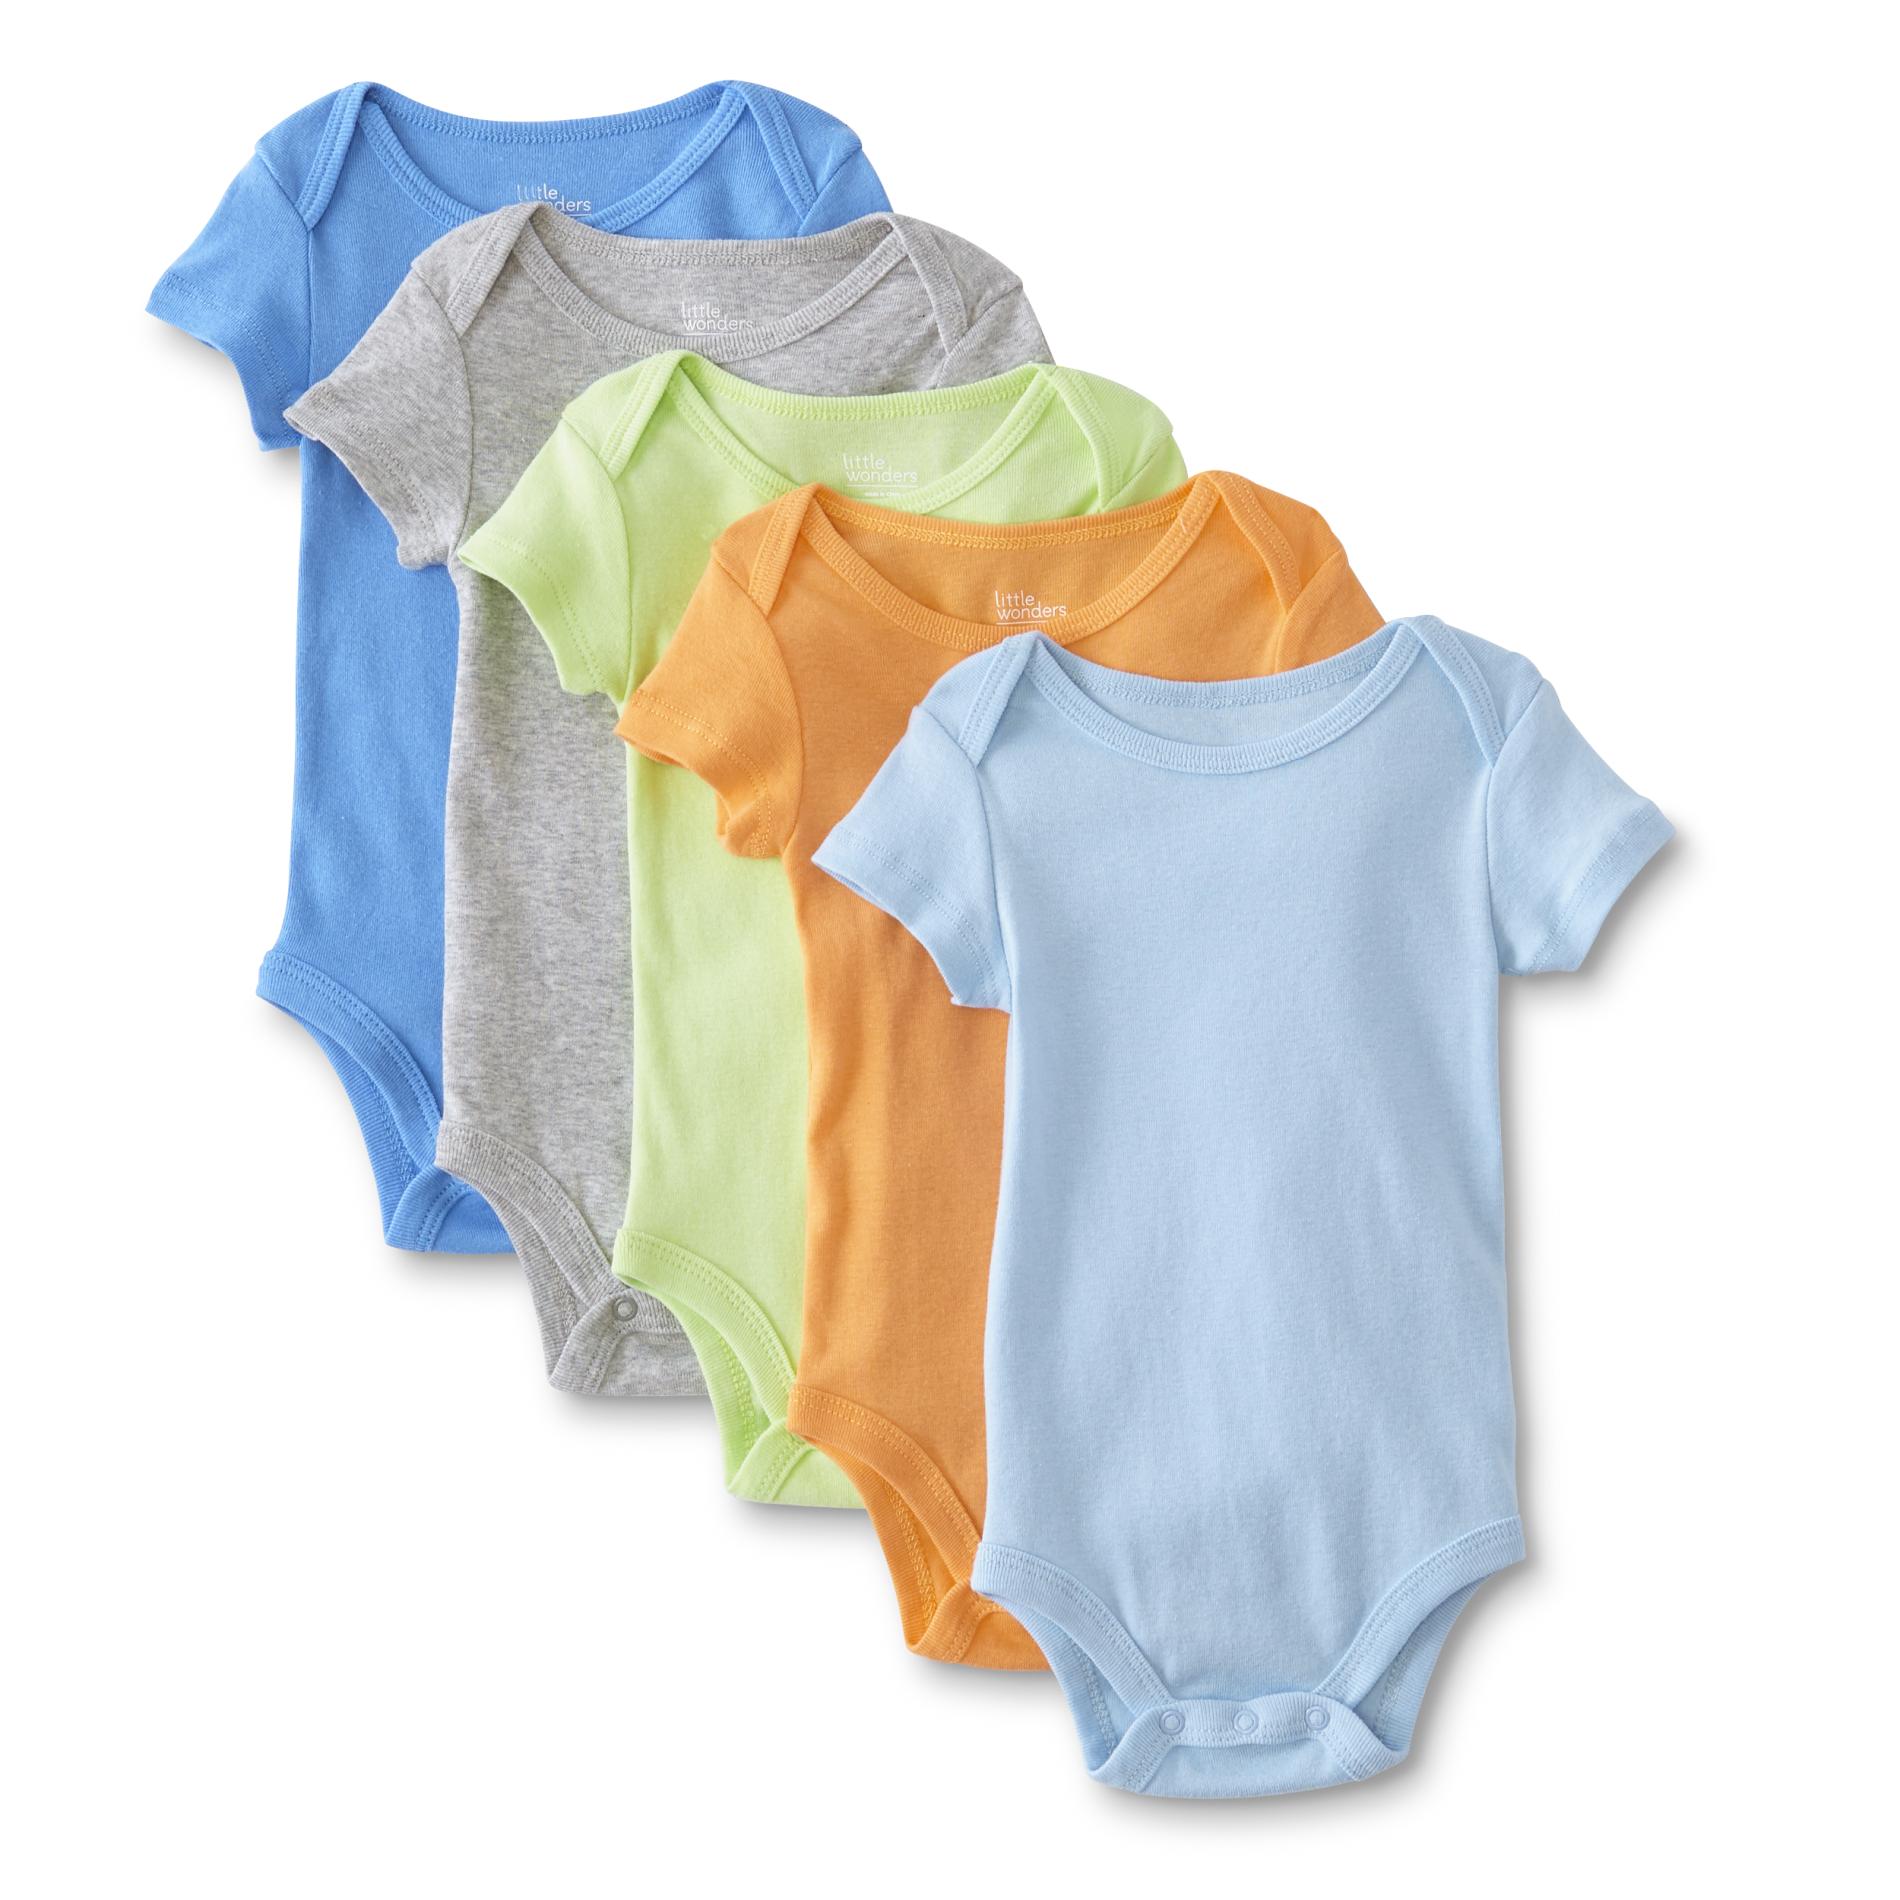 Little Wonders Infants' 5-Pack Bodysuits